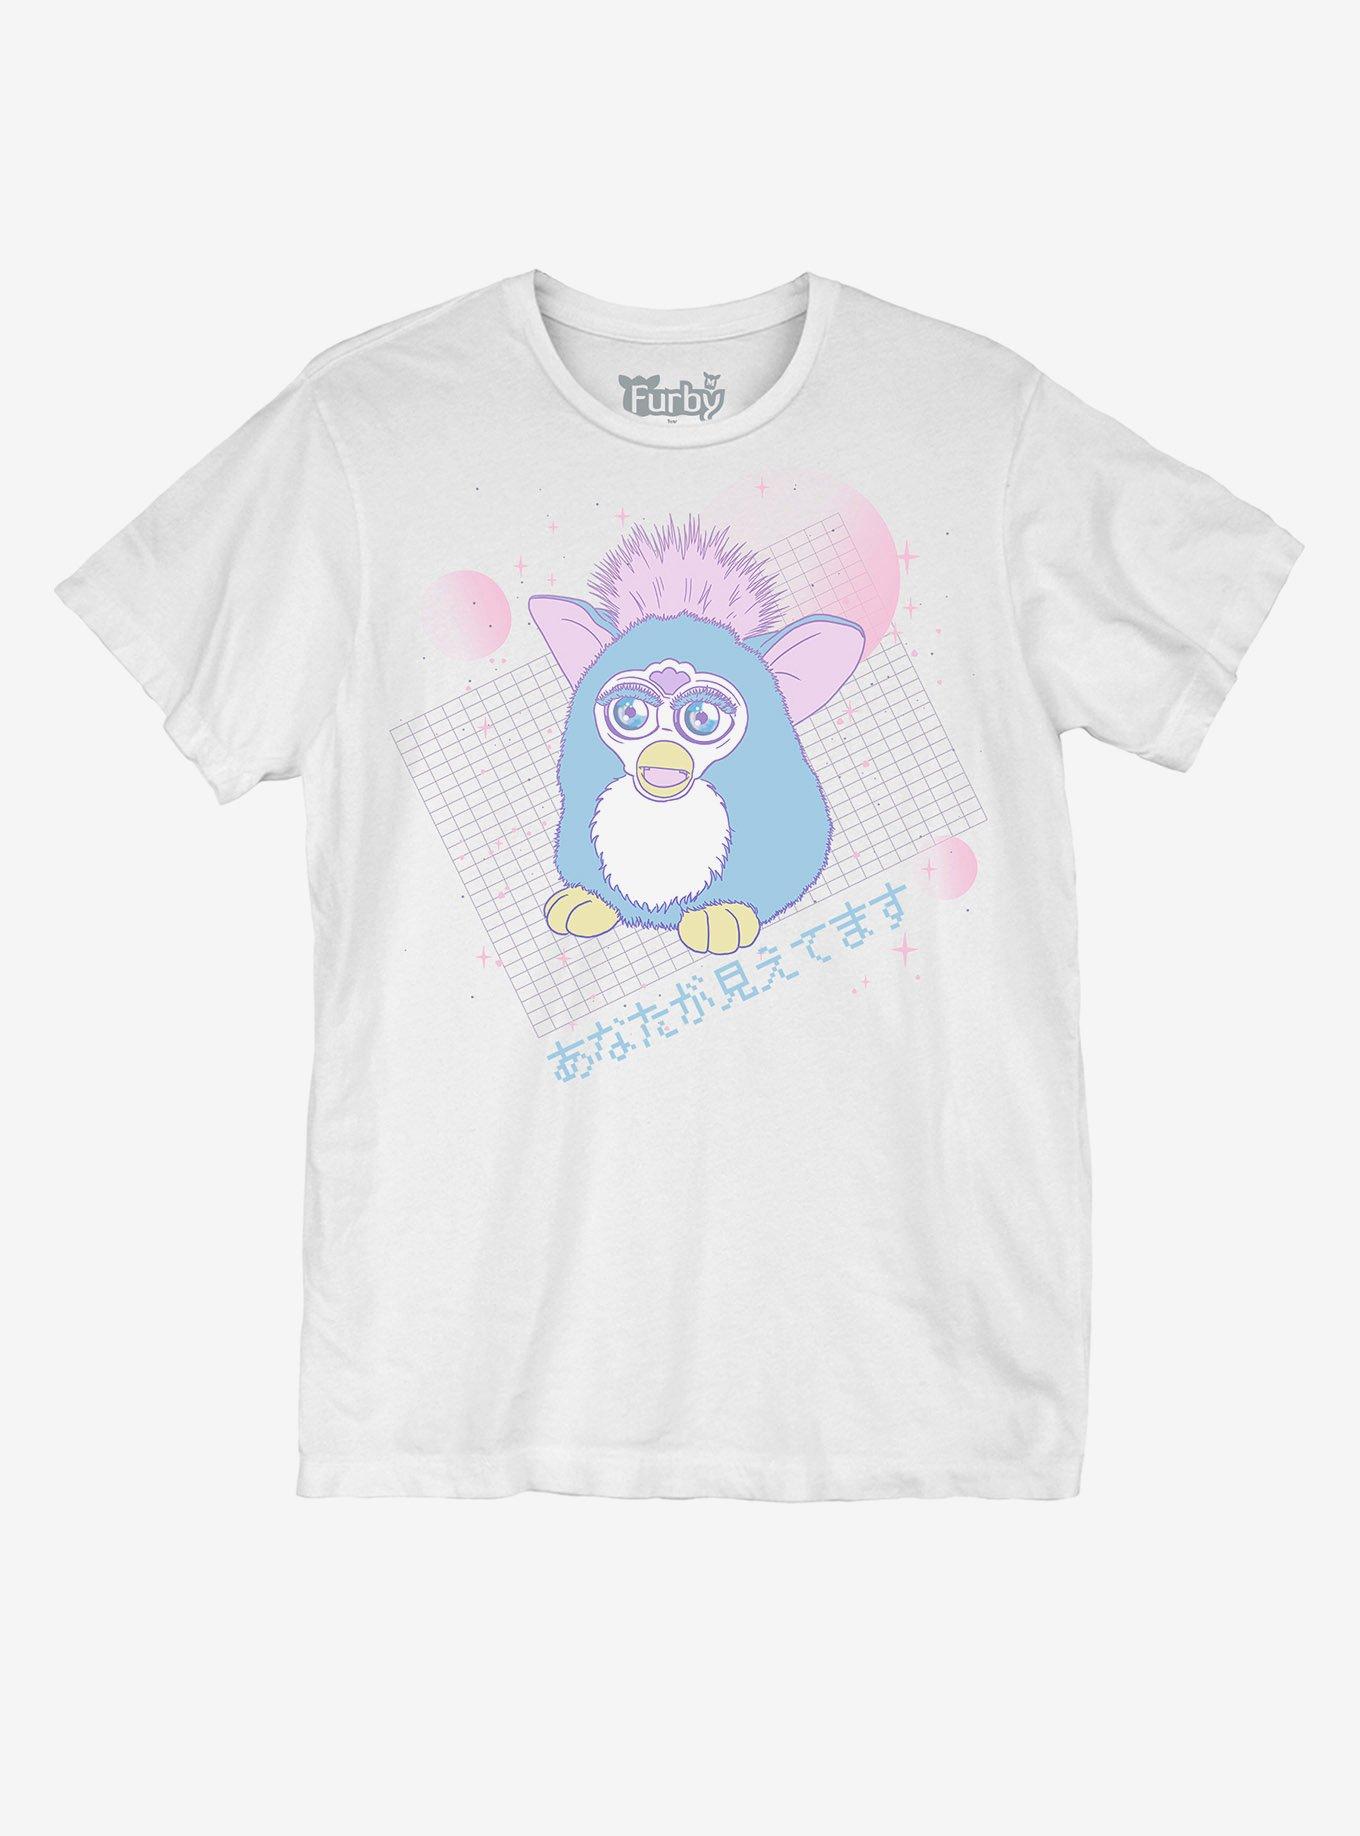 Furby Kawaii Boyfriend Fit Girls T-Shirt, MULTI, hi-res